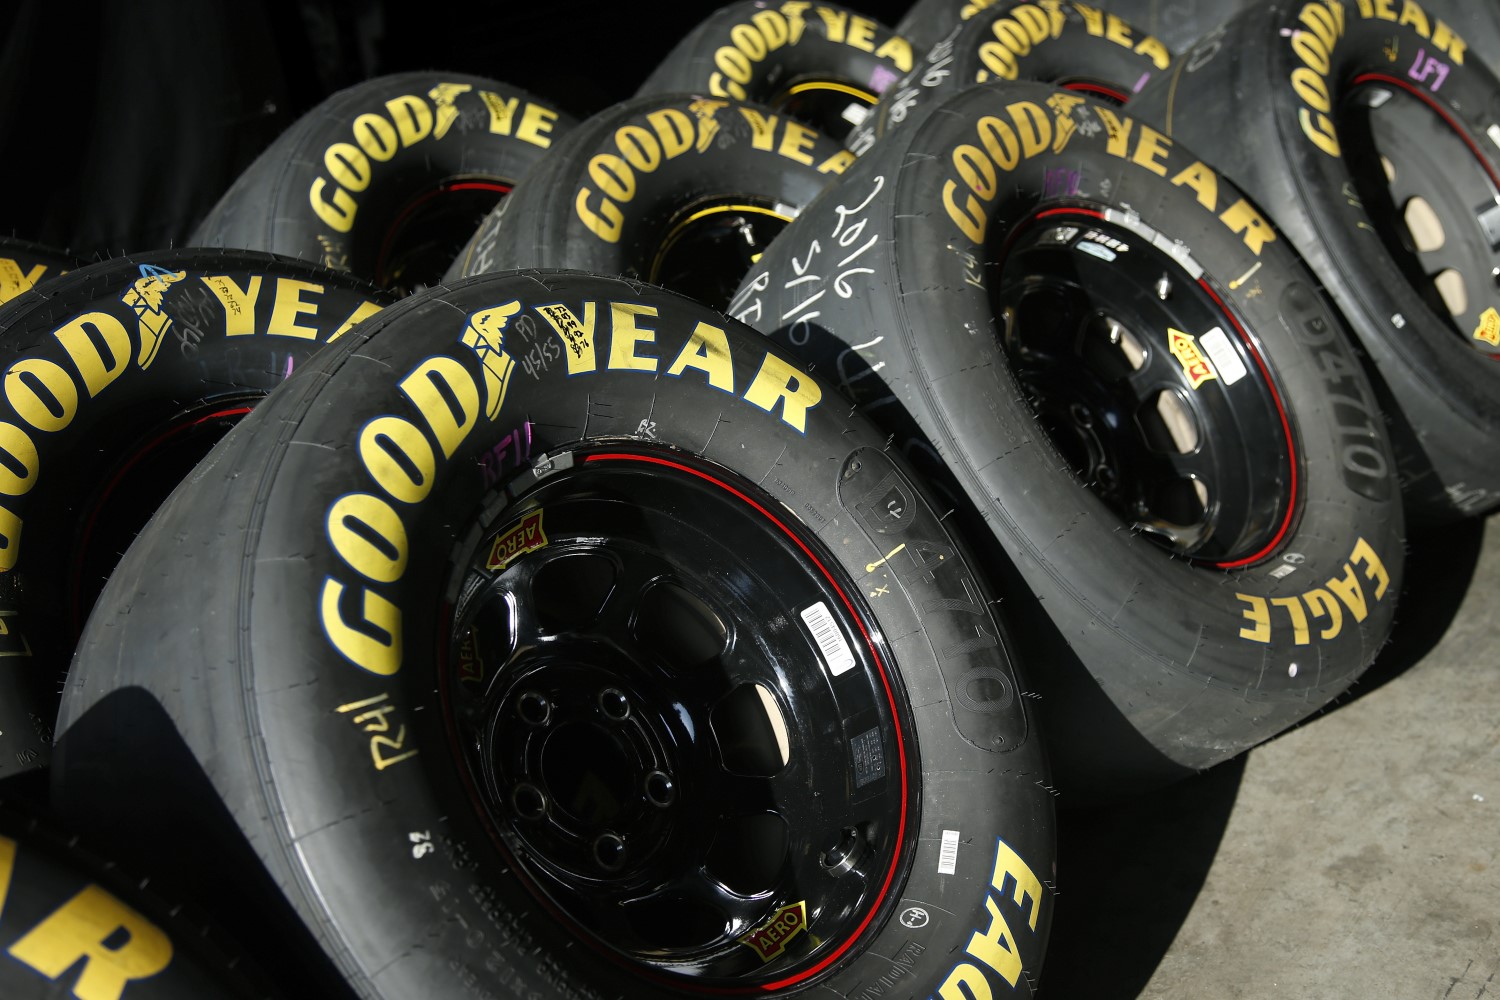 Goodyear NASCAR tires